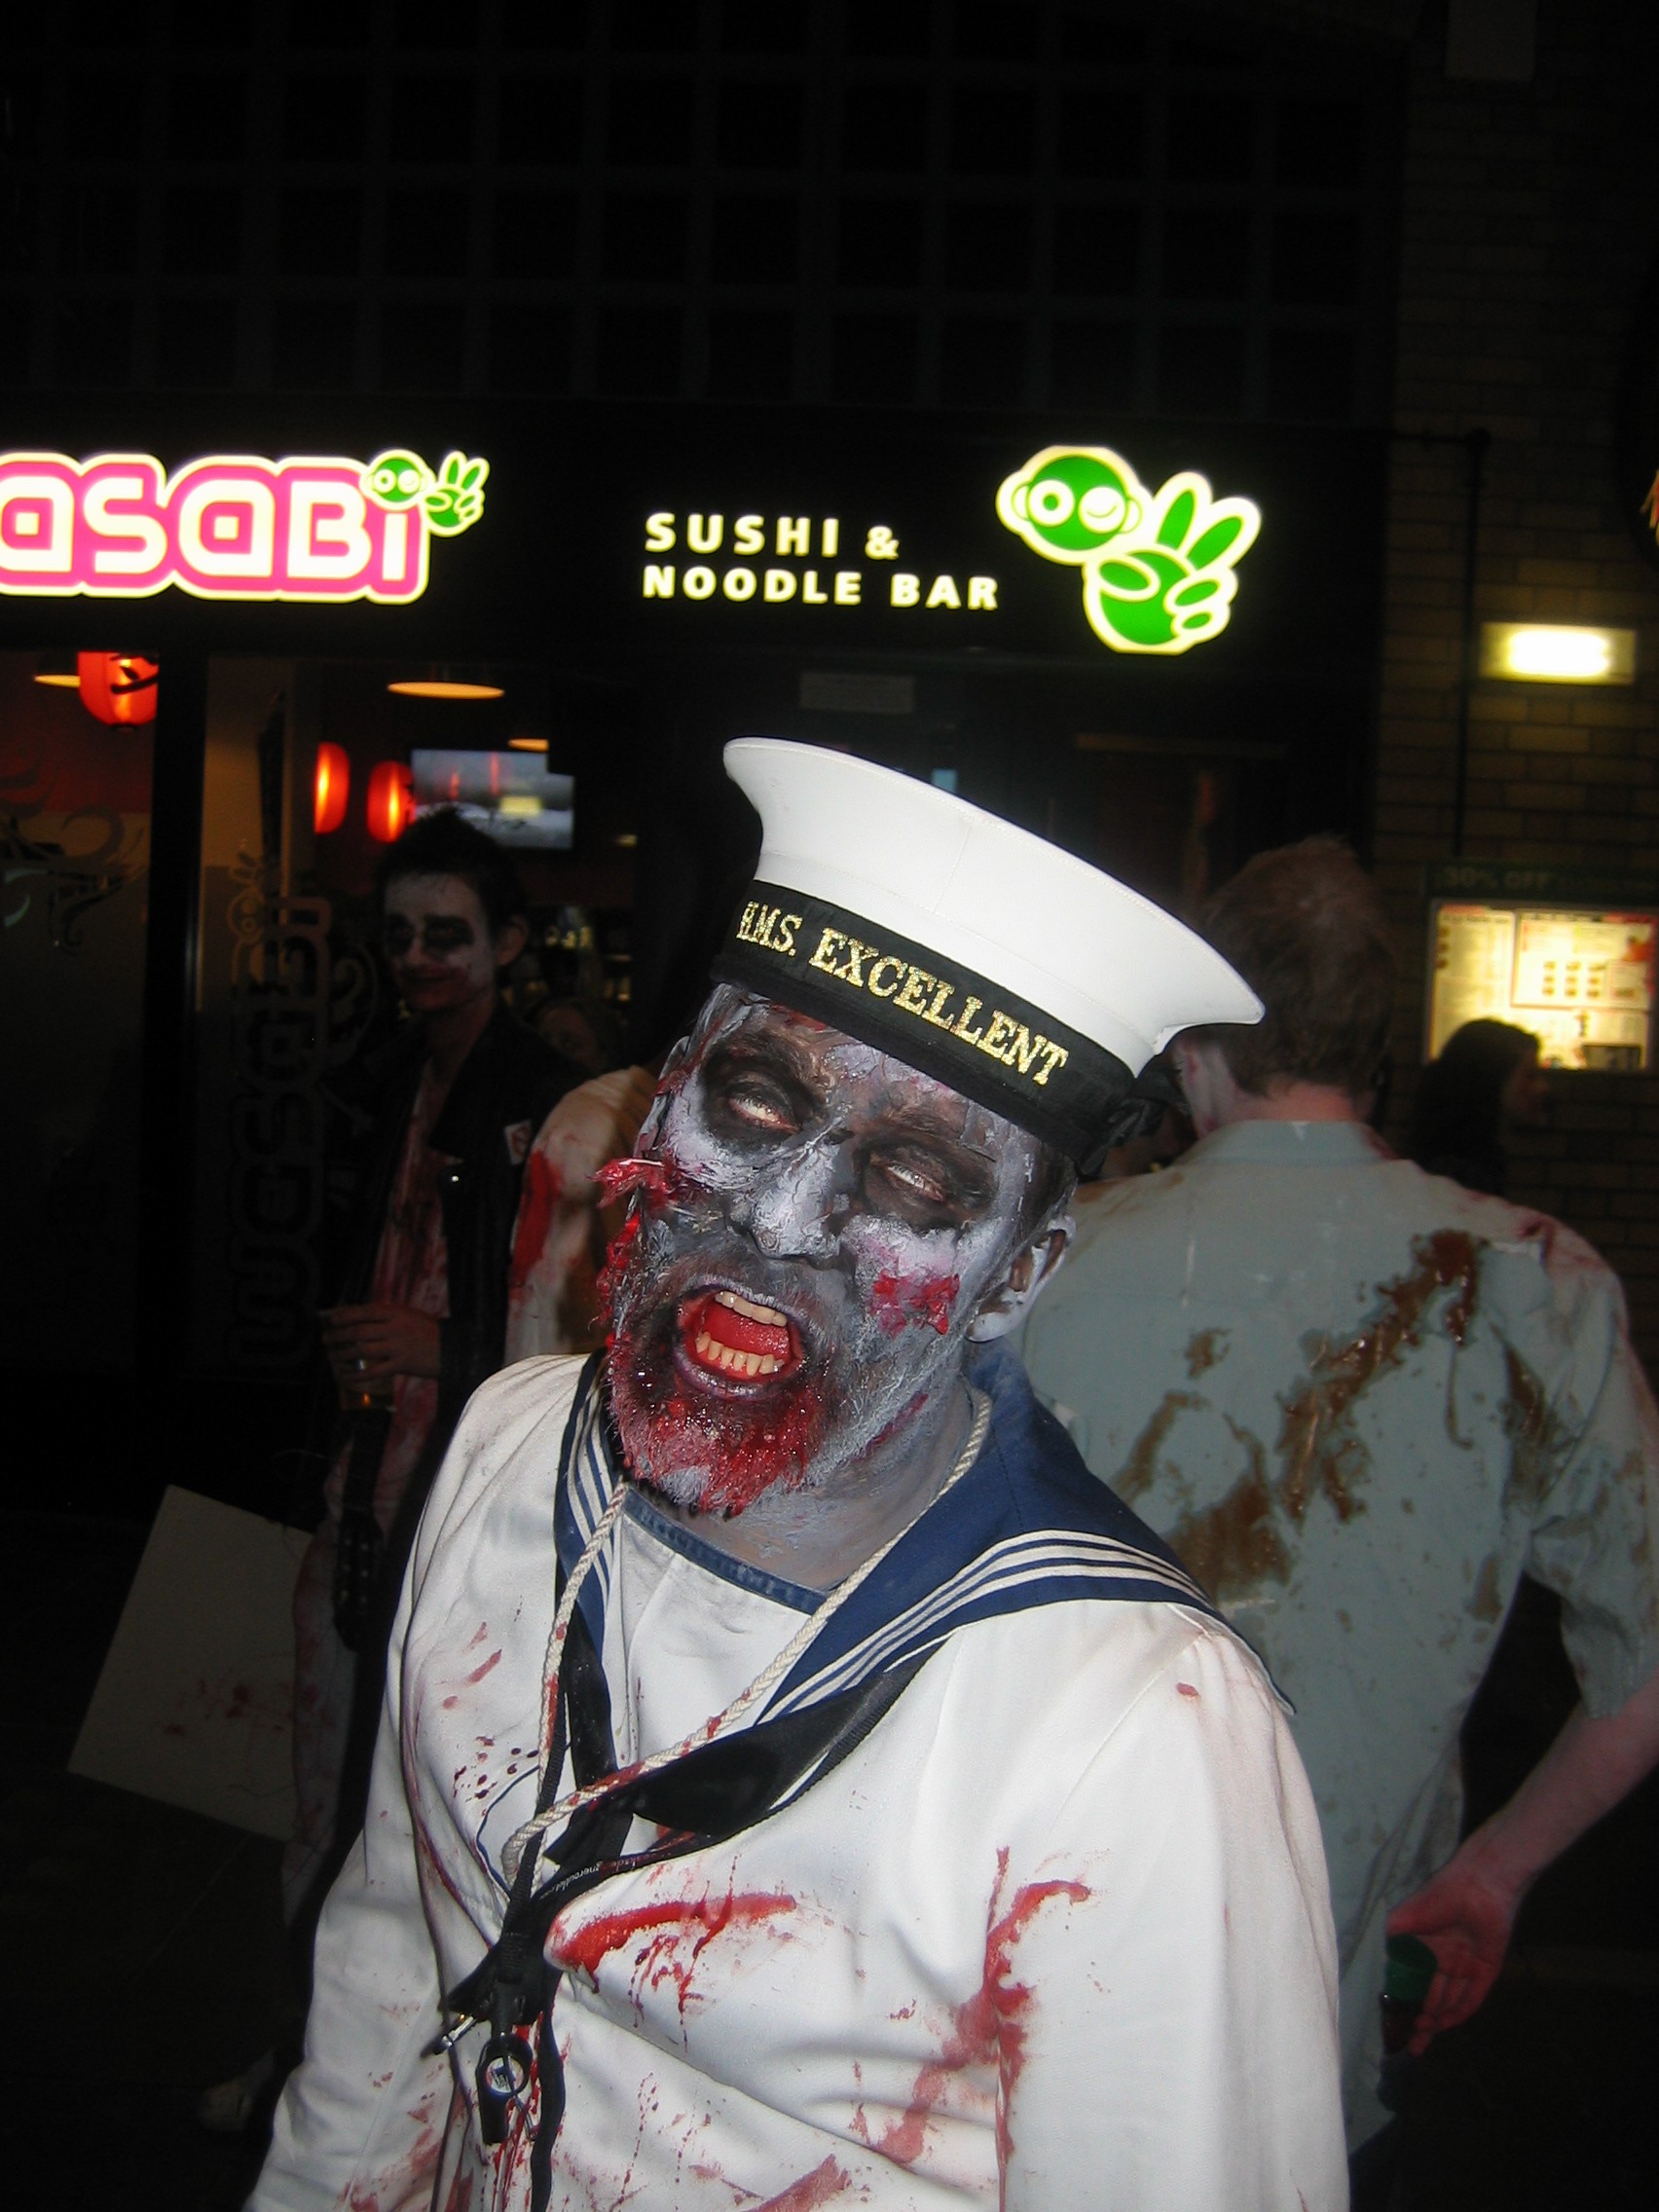 Photo taken by me – zombie sailor